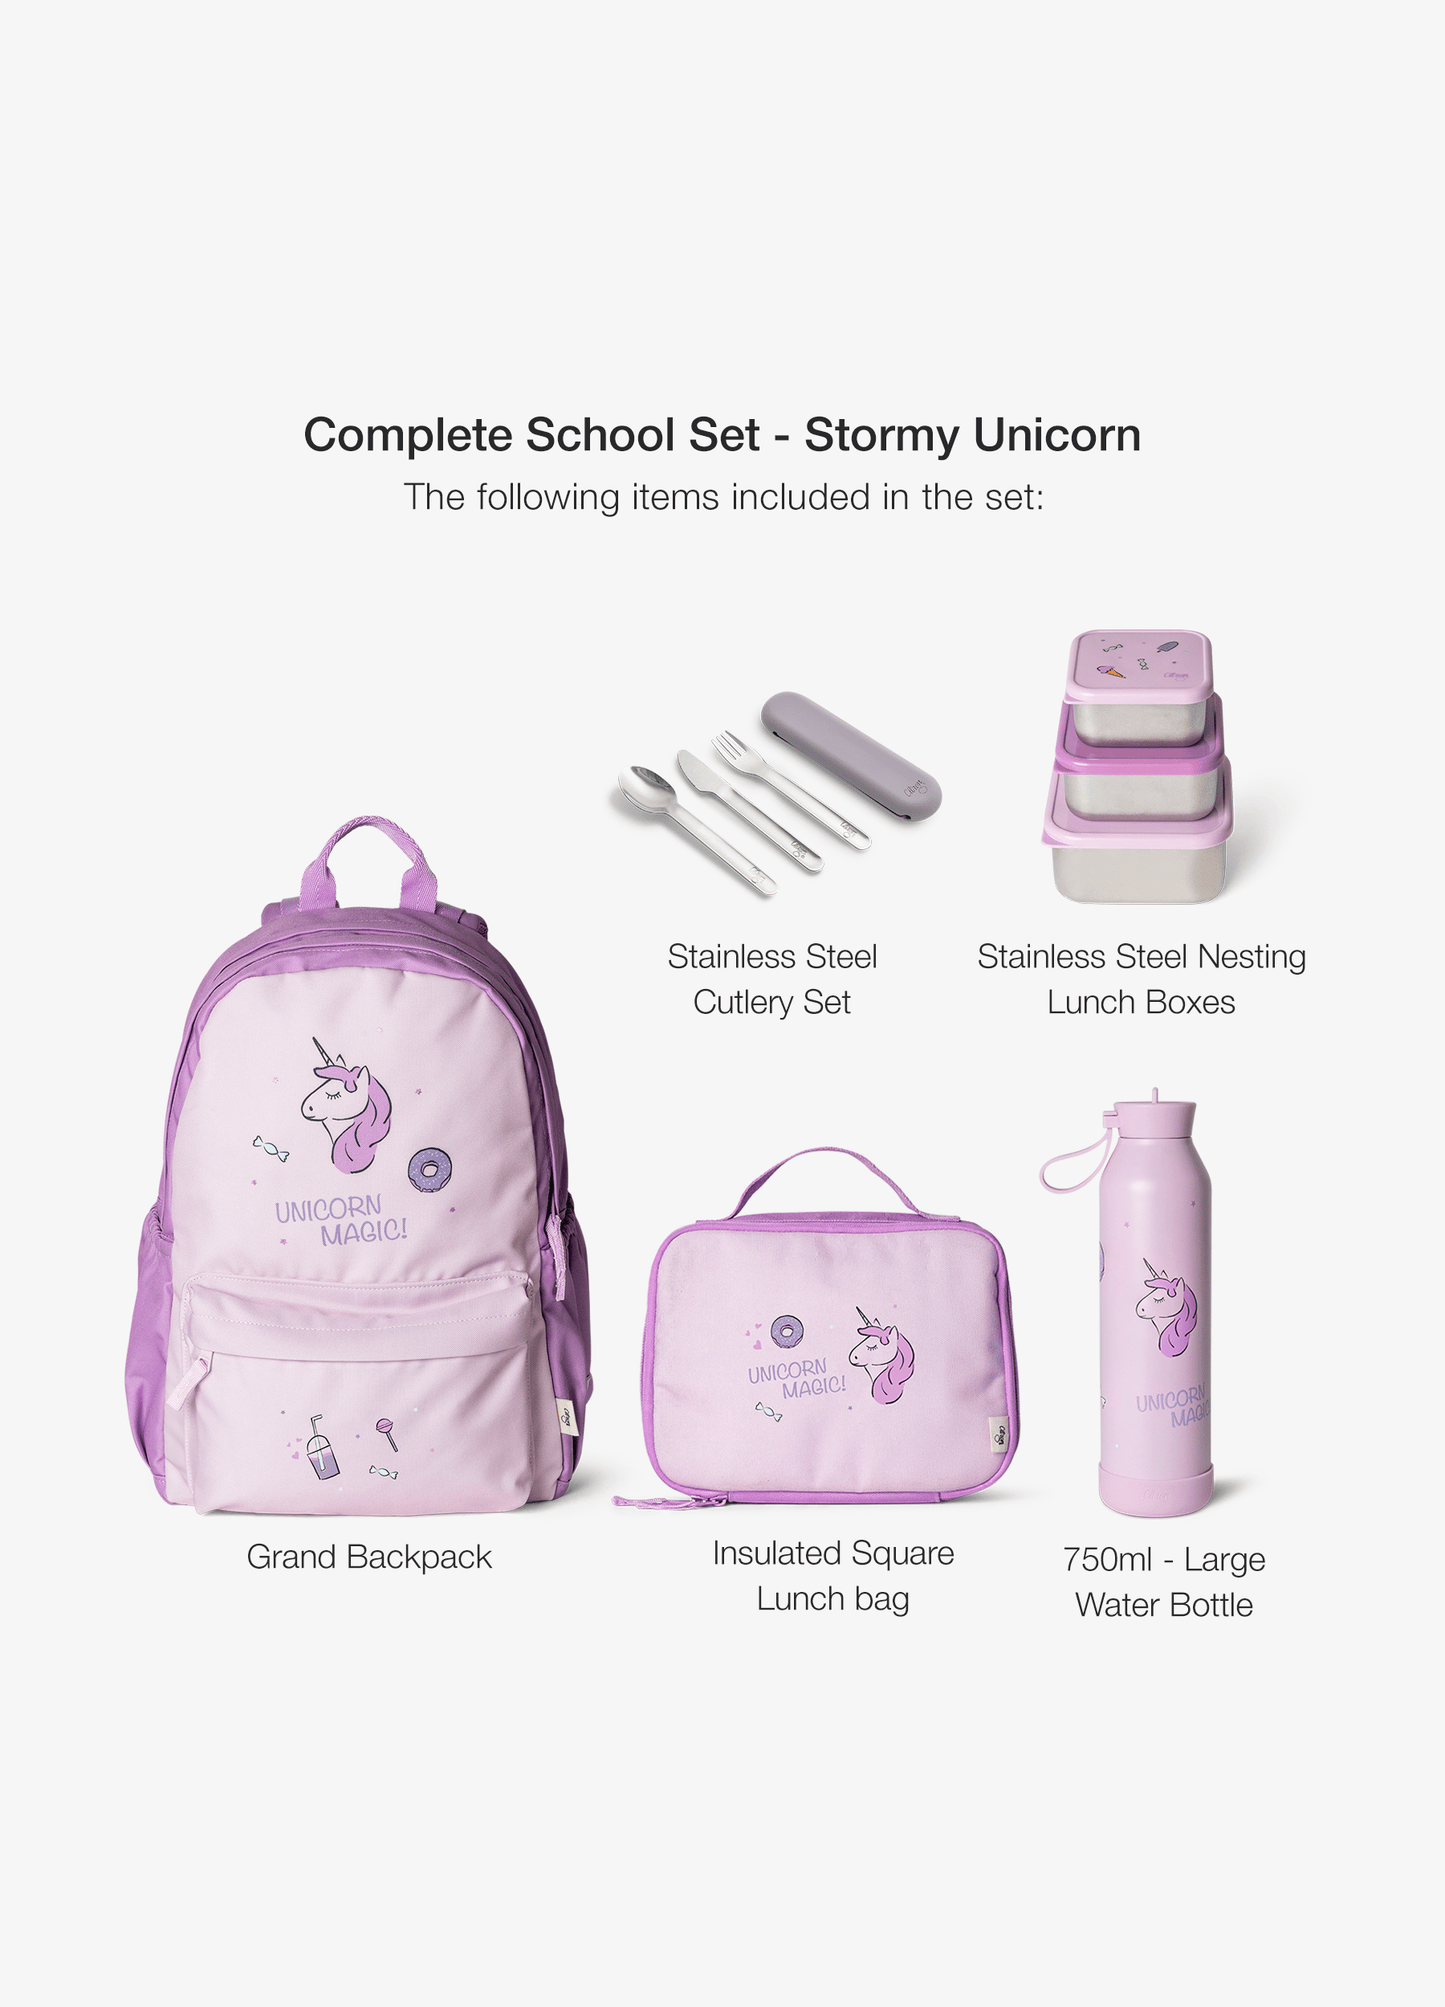 Complete School Set - Set of 5 - Stormy Unicorn